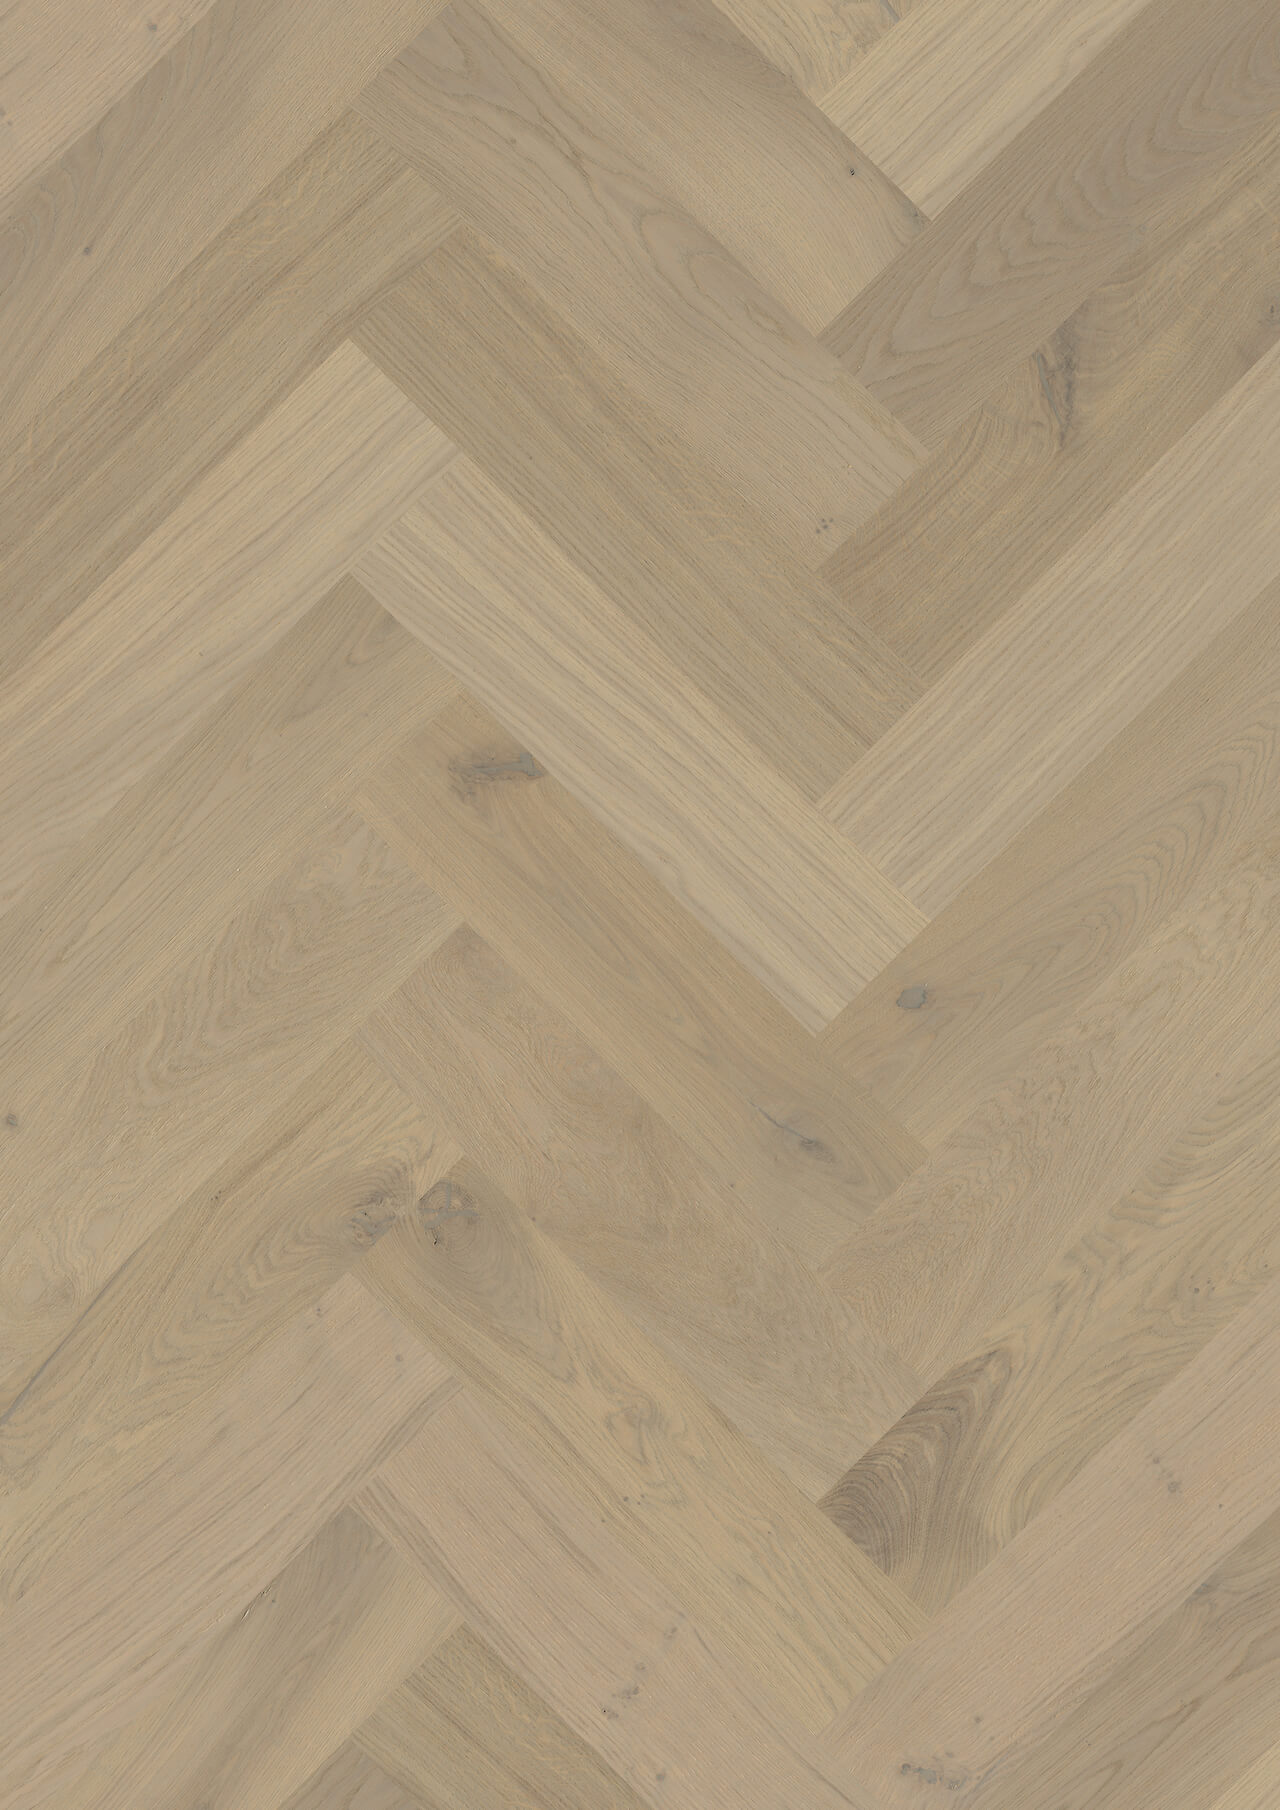 Premium Floors Quick-Step Natures Oak Herringbone Aspen Grey